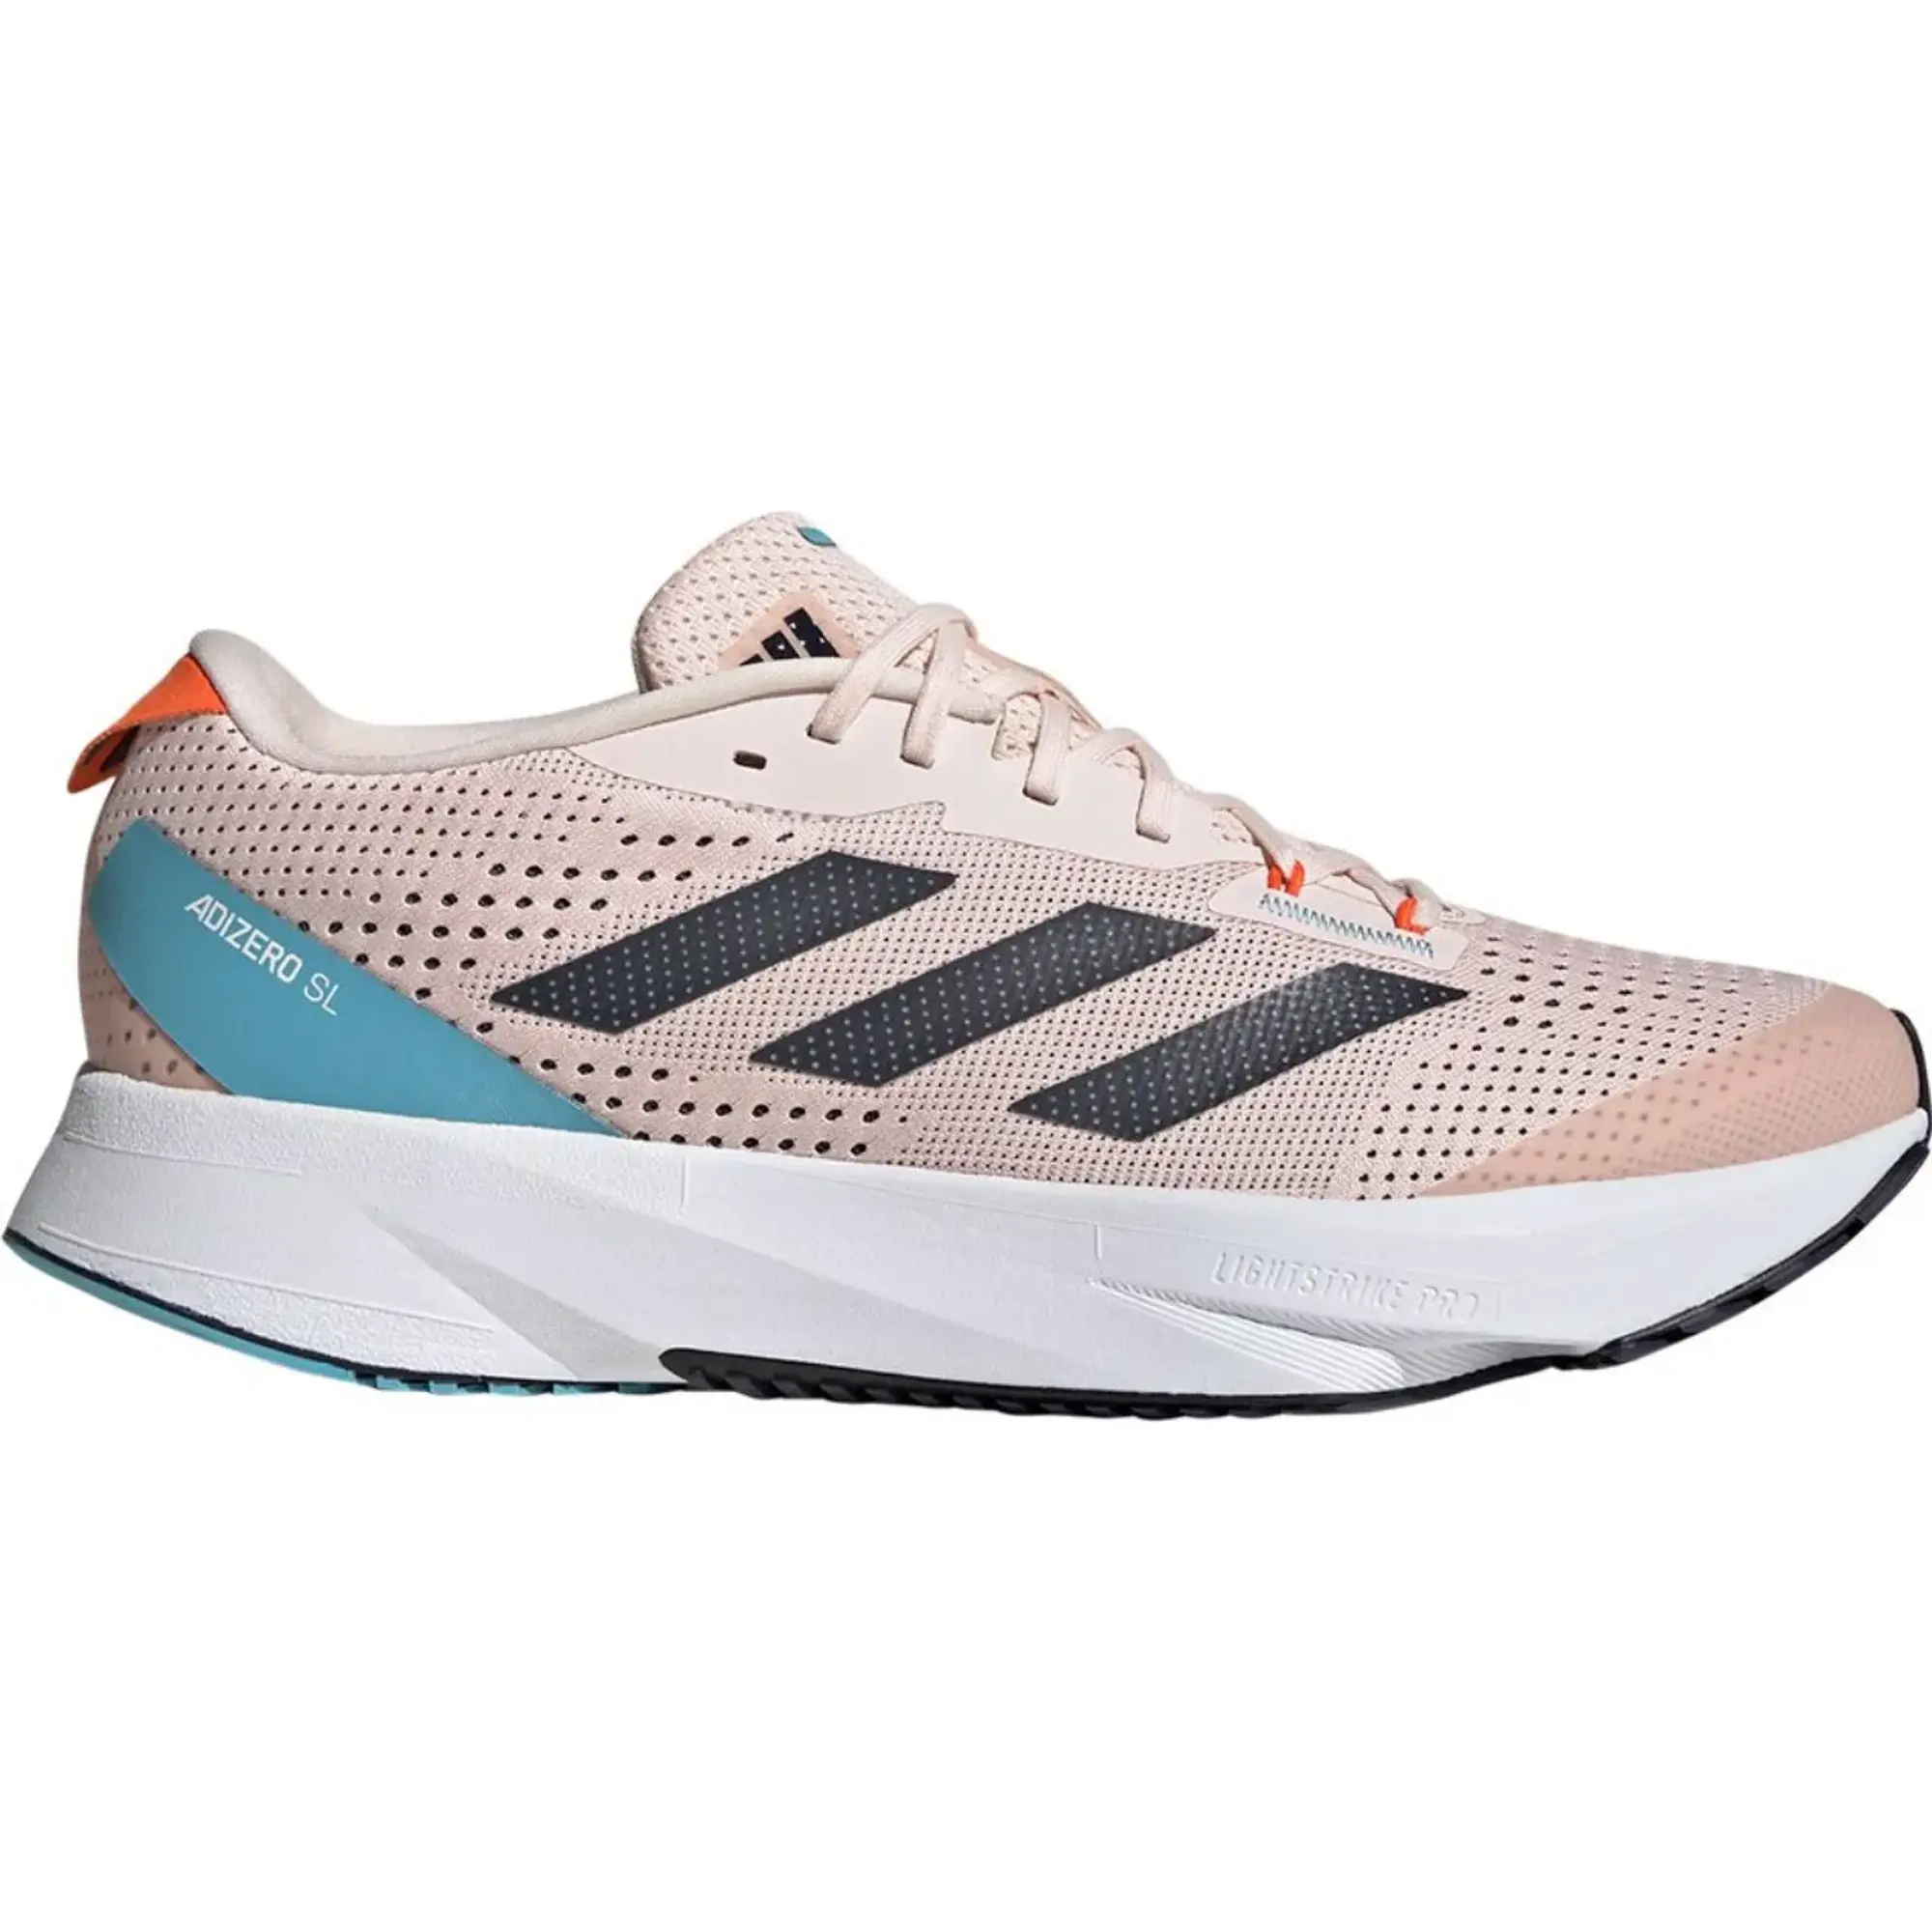 Adidas Adizero Sl Running Shoes  EU 49 1/3 Man -